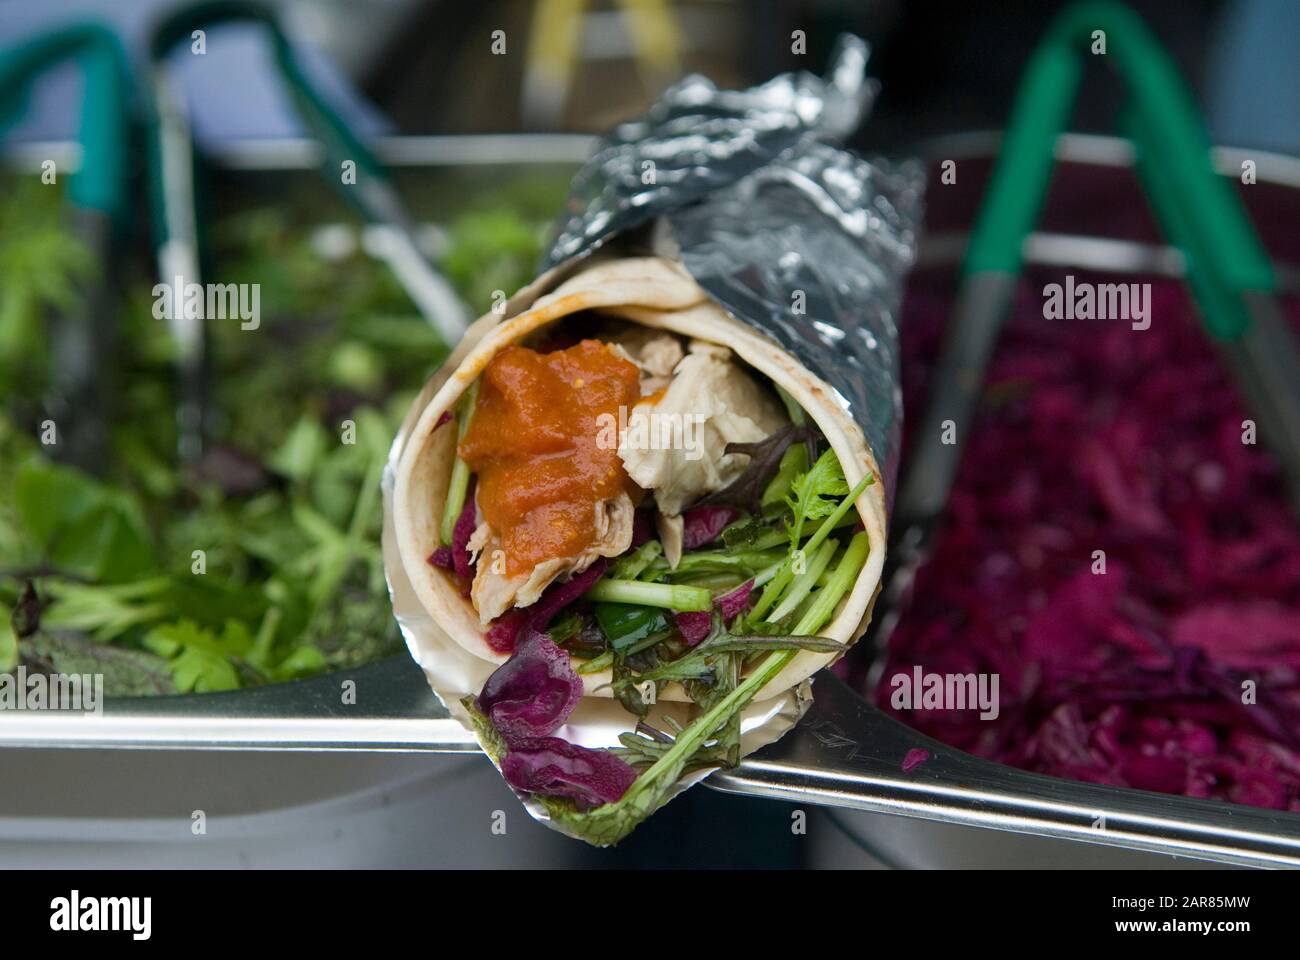 Fast Take Away Food Free Range Huhn und Salat serviert auf einem Farmers Market Highgate London UK. Fosse Meadows Farm Rotisserie Free Range Huhn 2010s HOMER SYKES Stockfoto